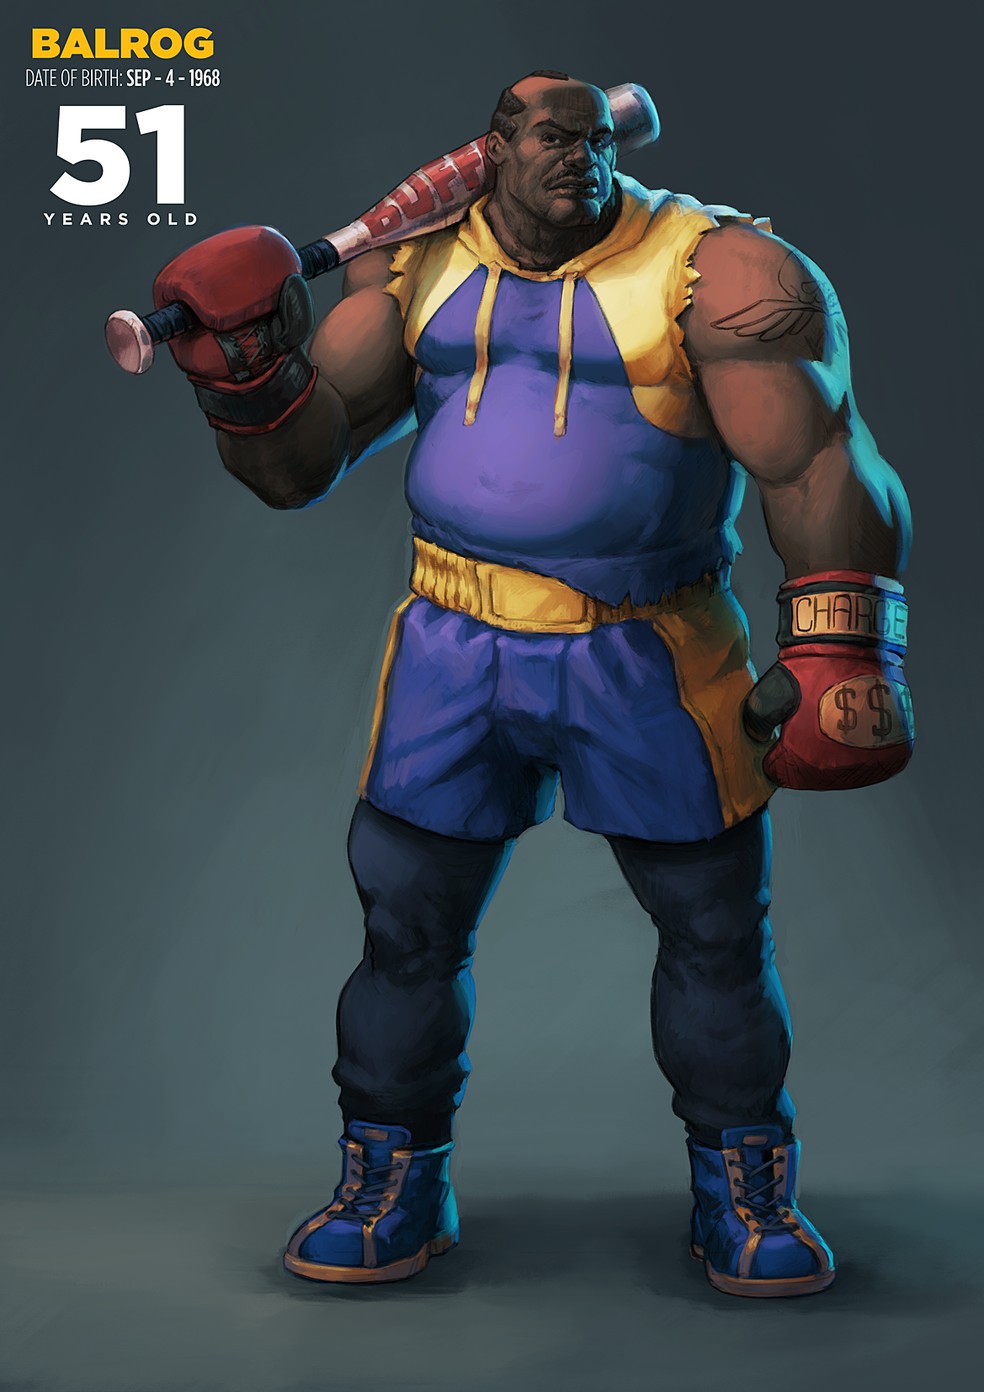 street fighter personagens brasileiros - Pesquisa Google